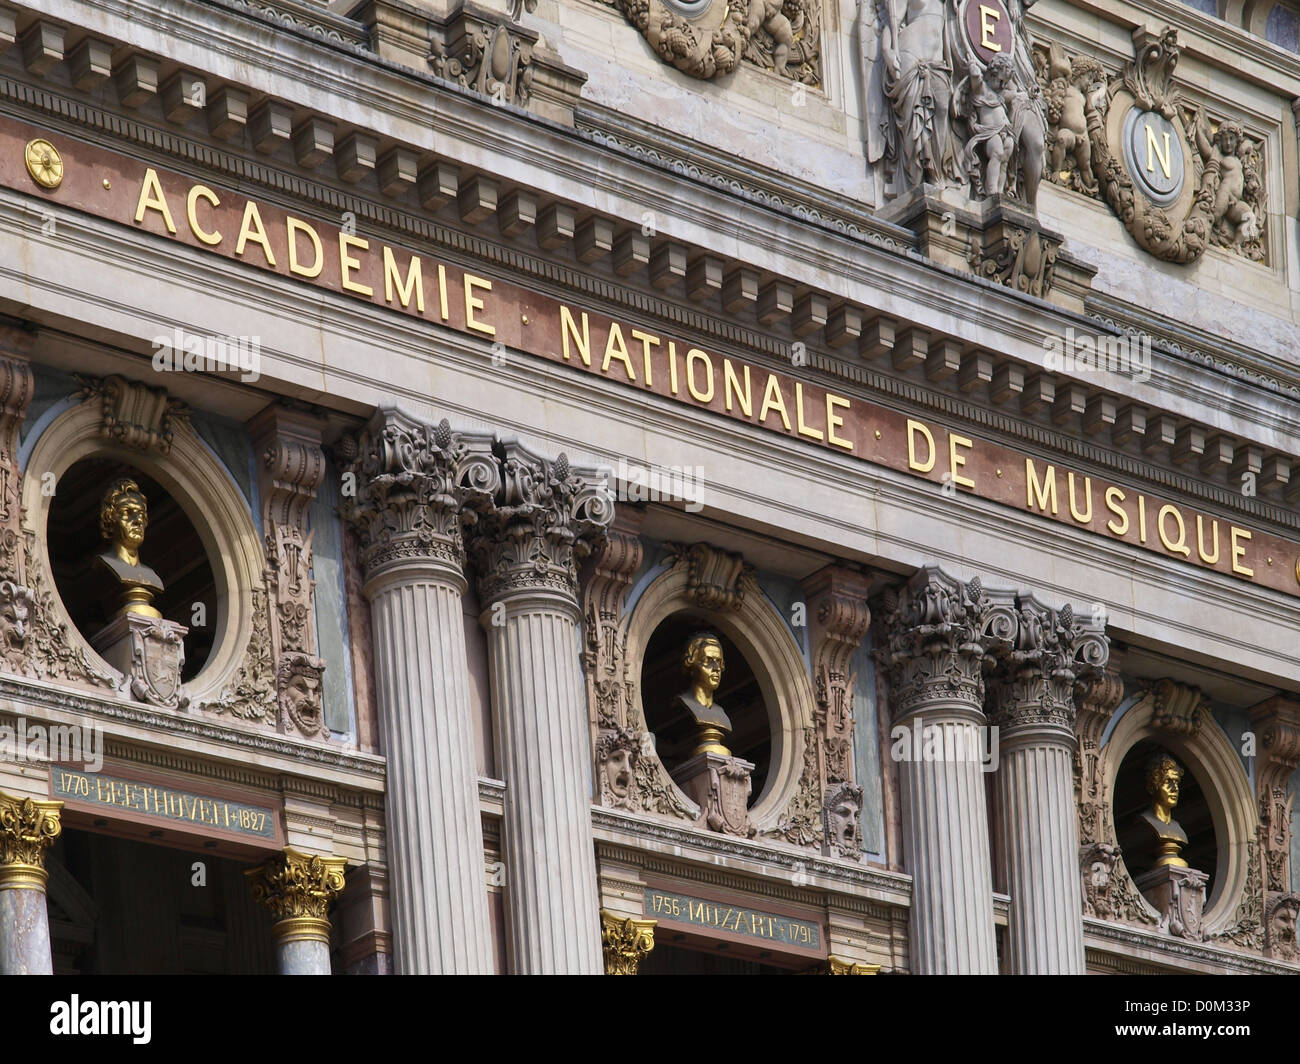 academie nationale de musique